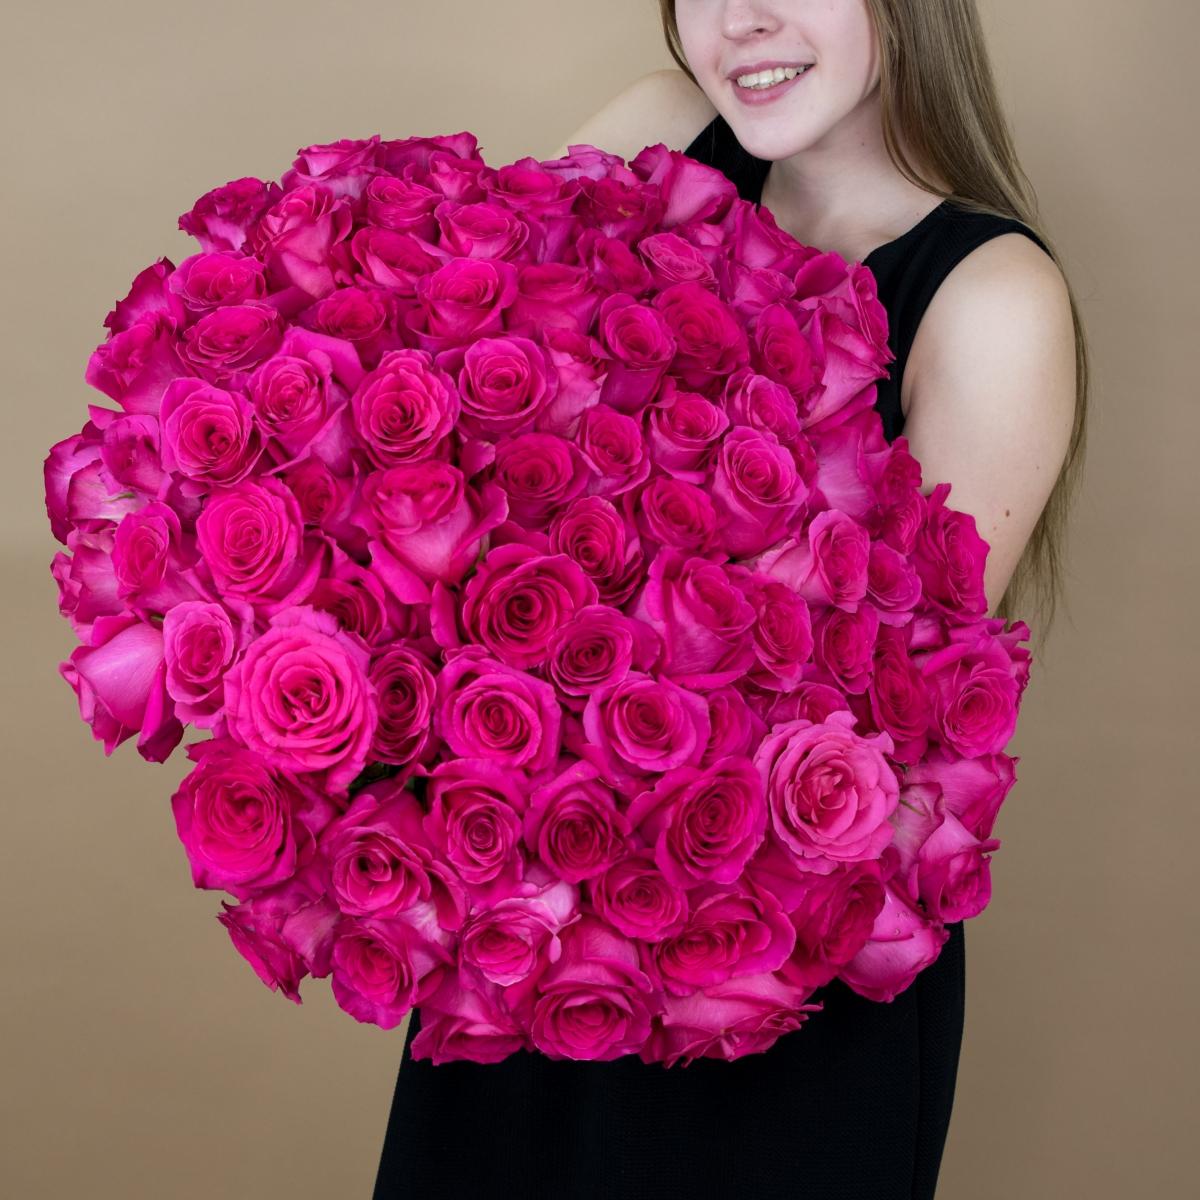 Букет из розовых роз 75 шт. (40 см) Артикул: 8085s